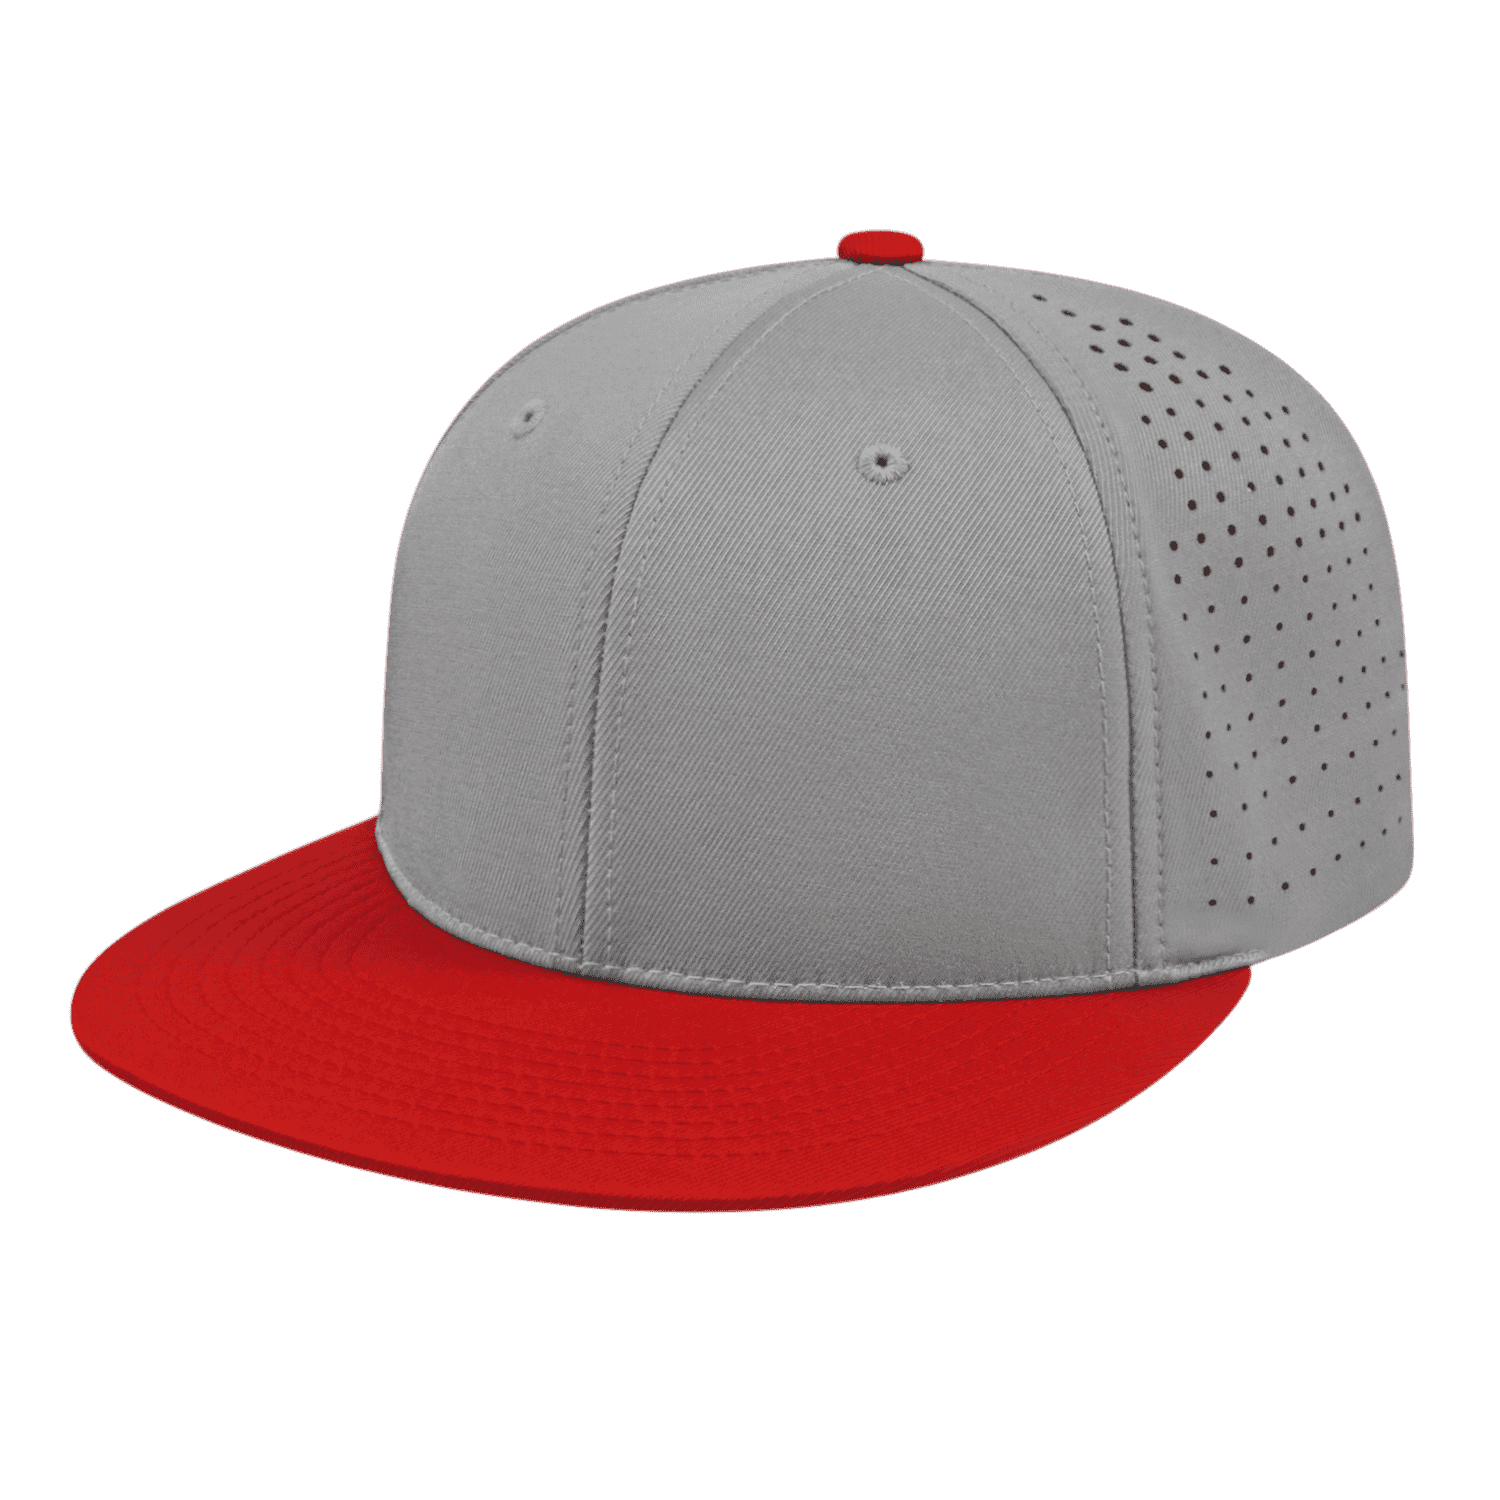 Cap America - Flexfit i8503 Perforated Cap Silver Performance Red